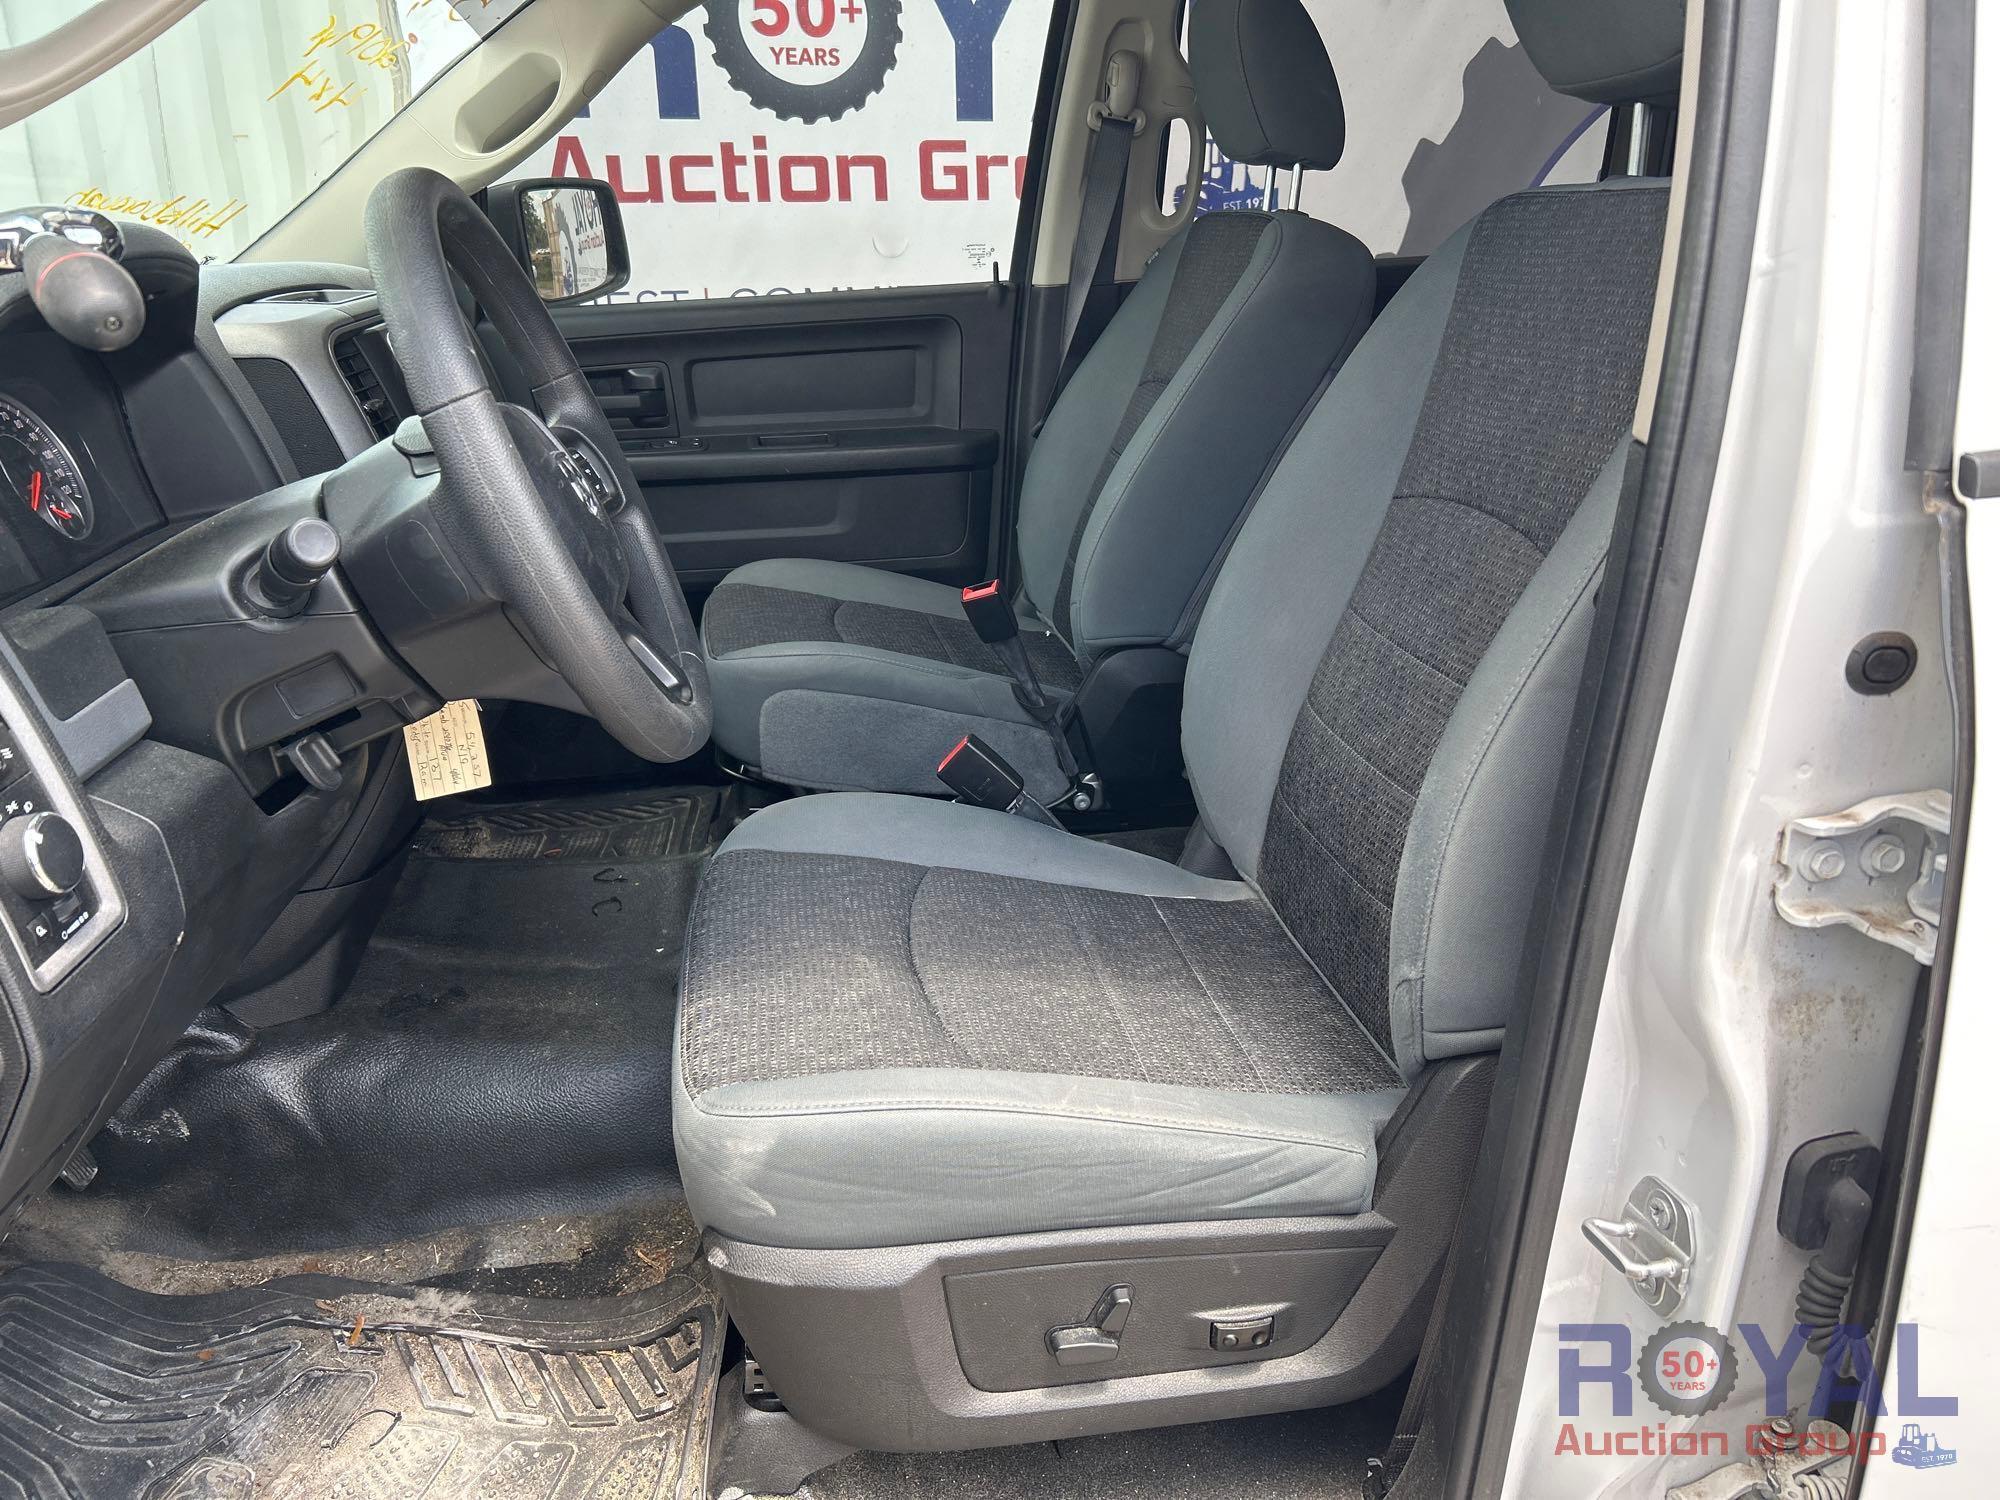 2019 Ram 1500 4x4 Crew Cab Pickup Truck